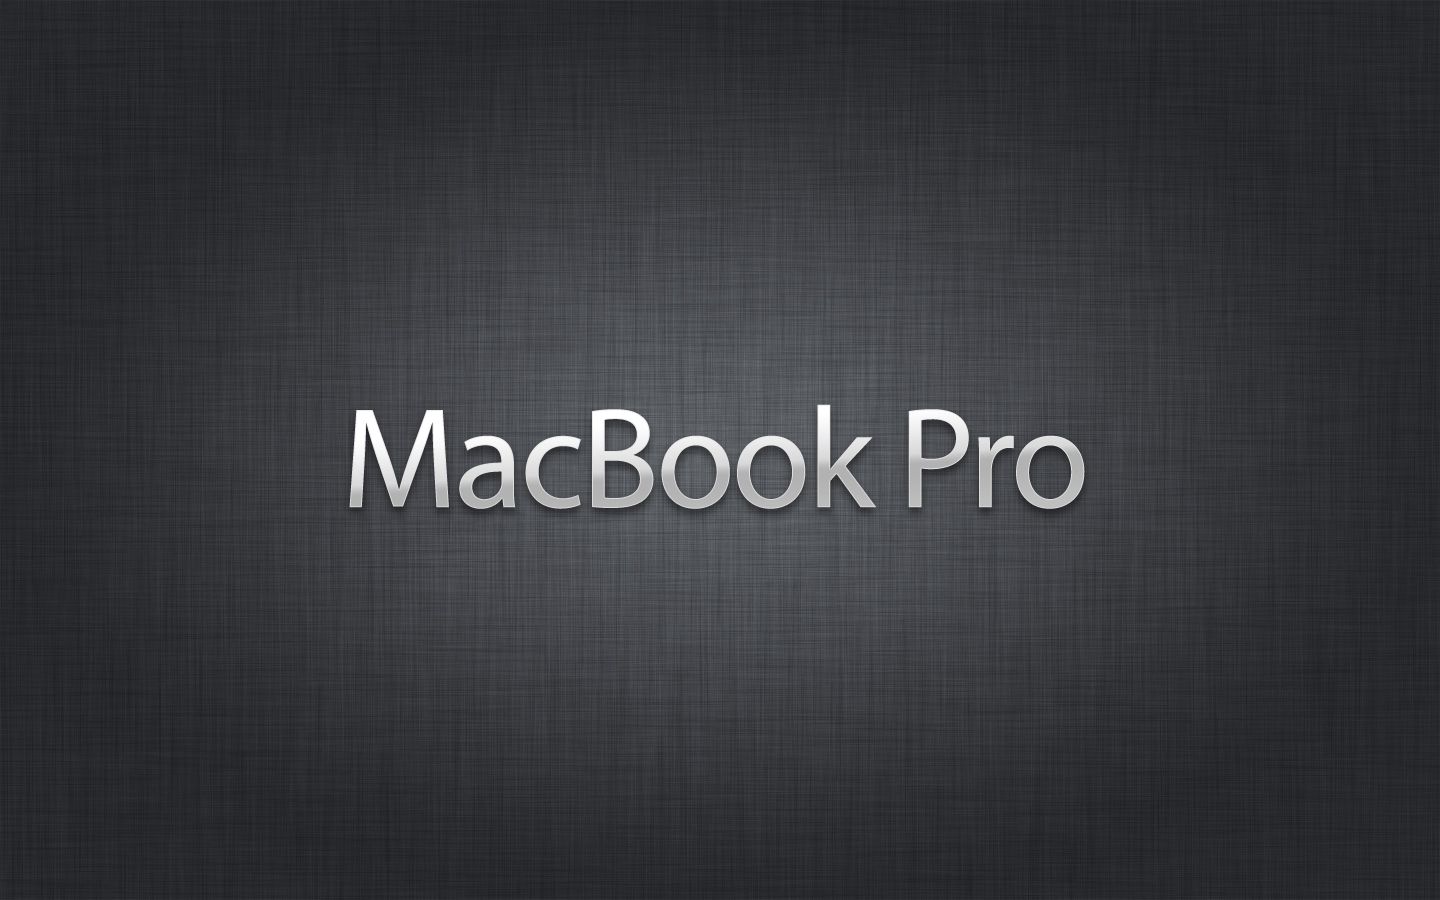 MacBook Pro Wallpaper HD #475 Wallpaper | ForWallpapers.com